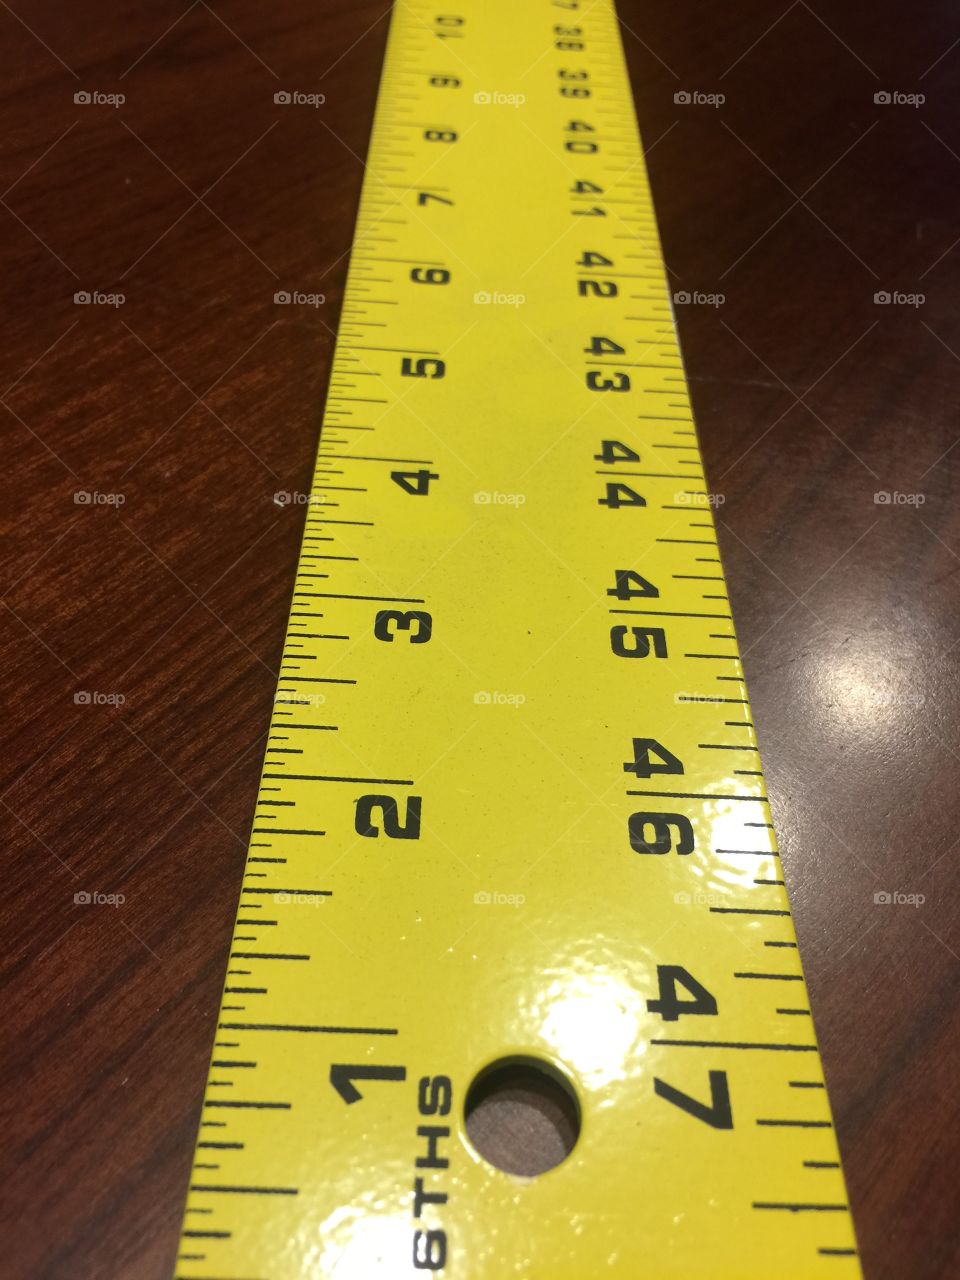 How do you measure up?